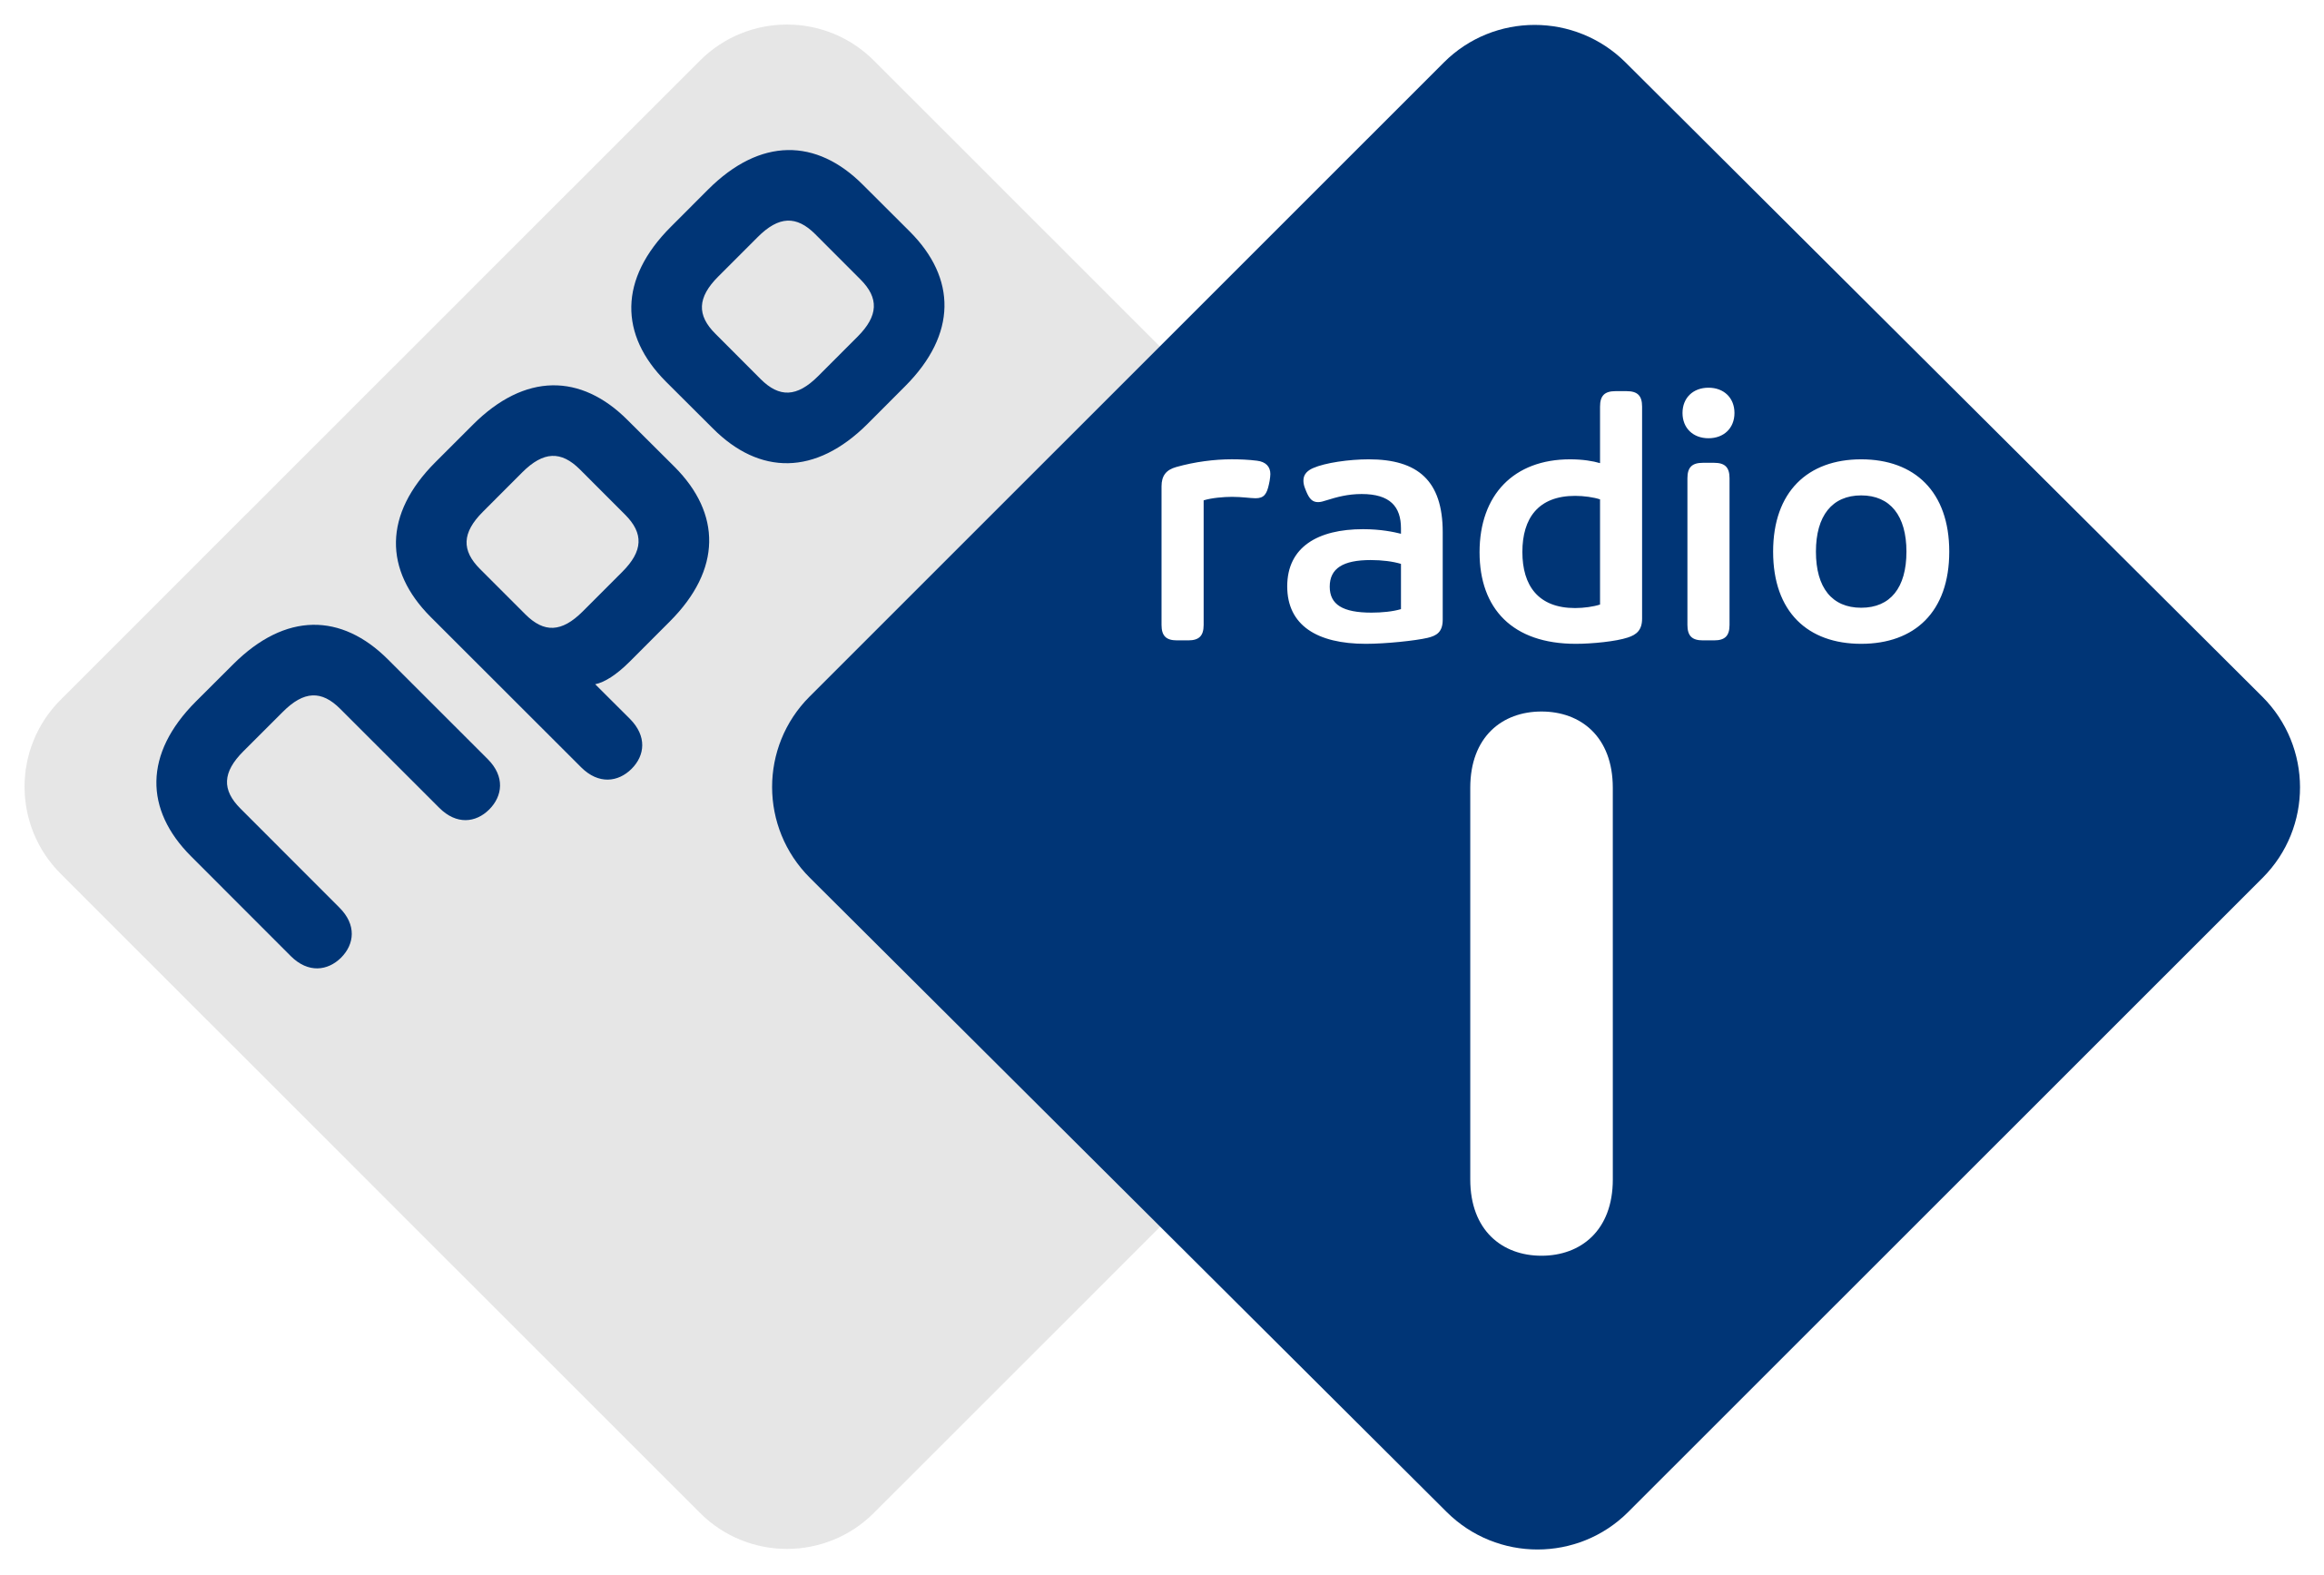 nporadio1 logo